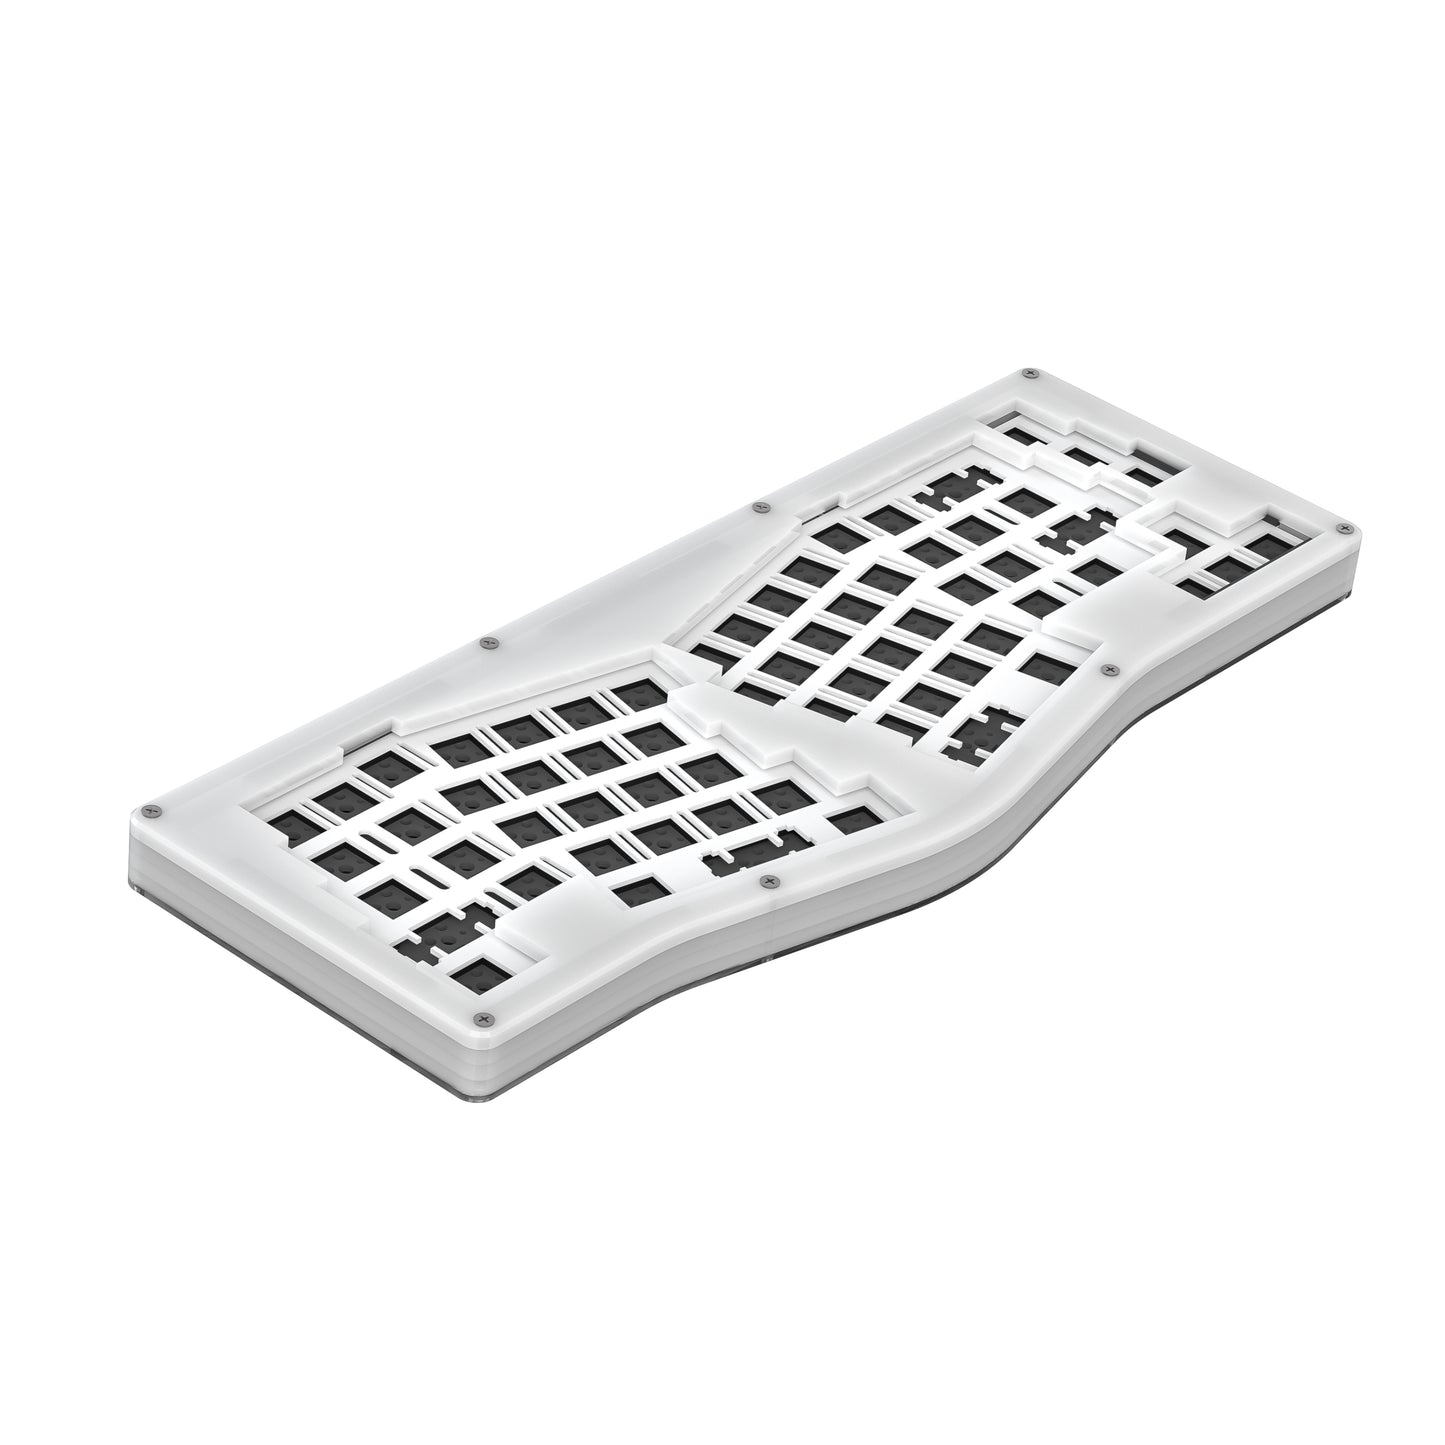 Full transparent keyboard | Fancytech Alice66